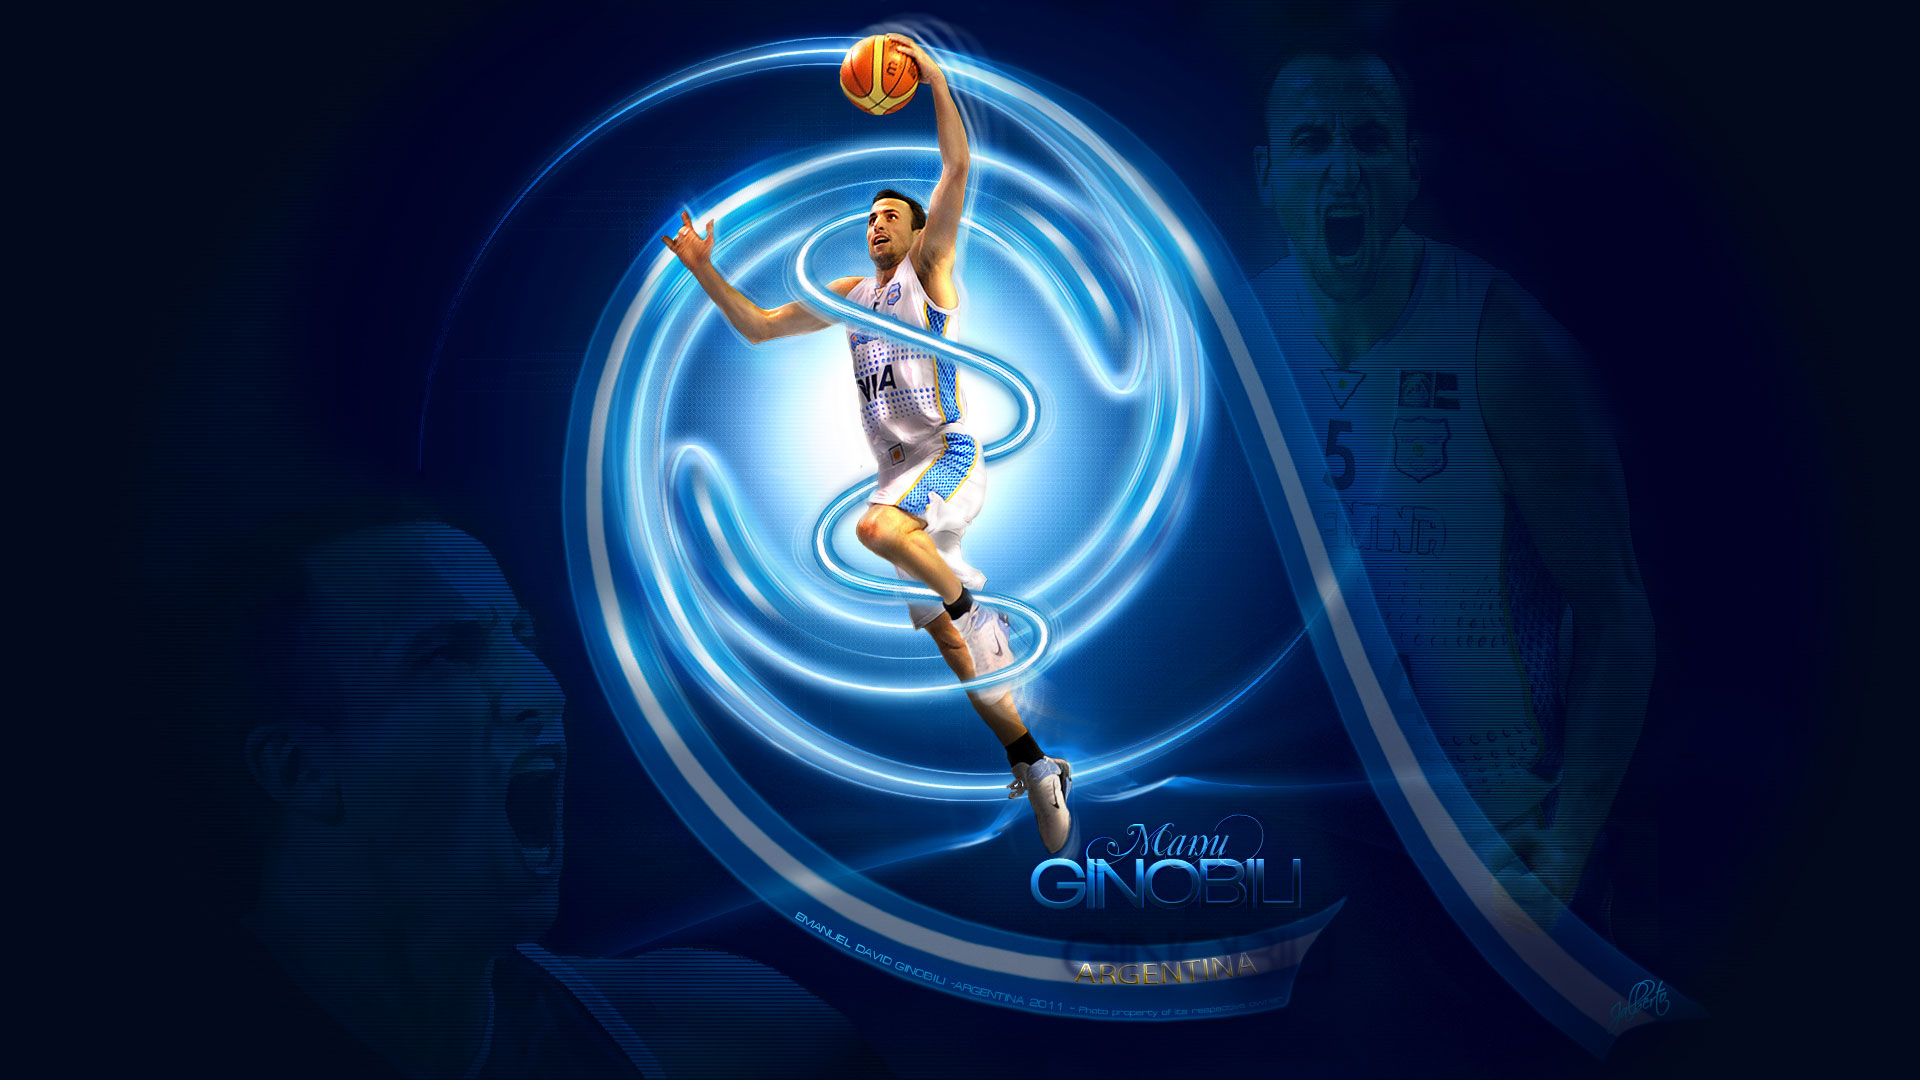 Manu Ginobili Argentina Nt Widescreen Wallpaper Basketball